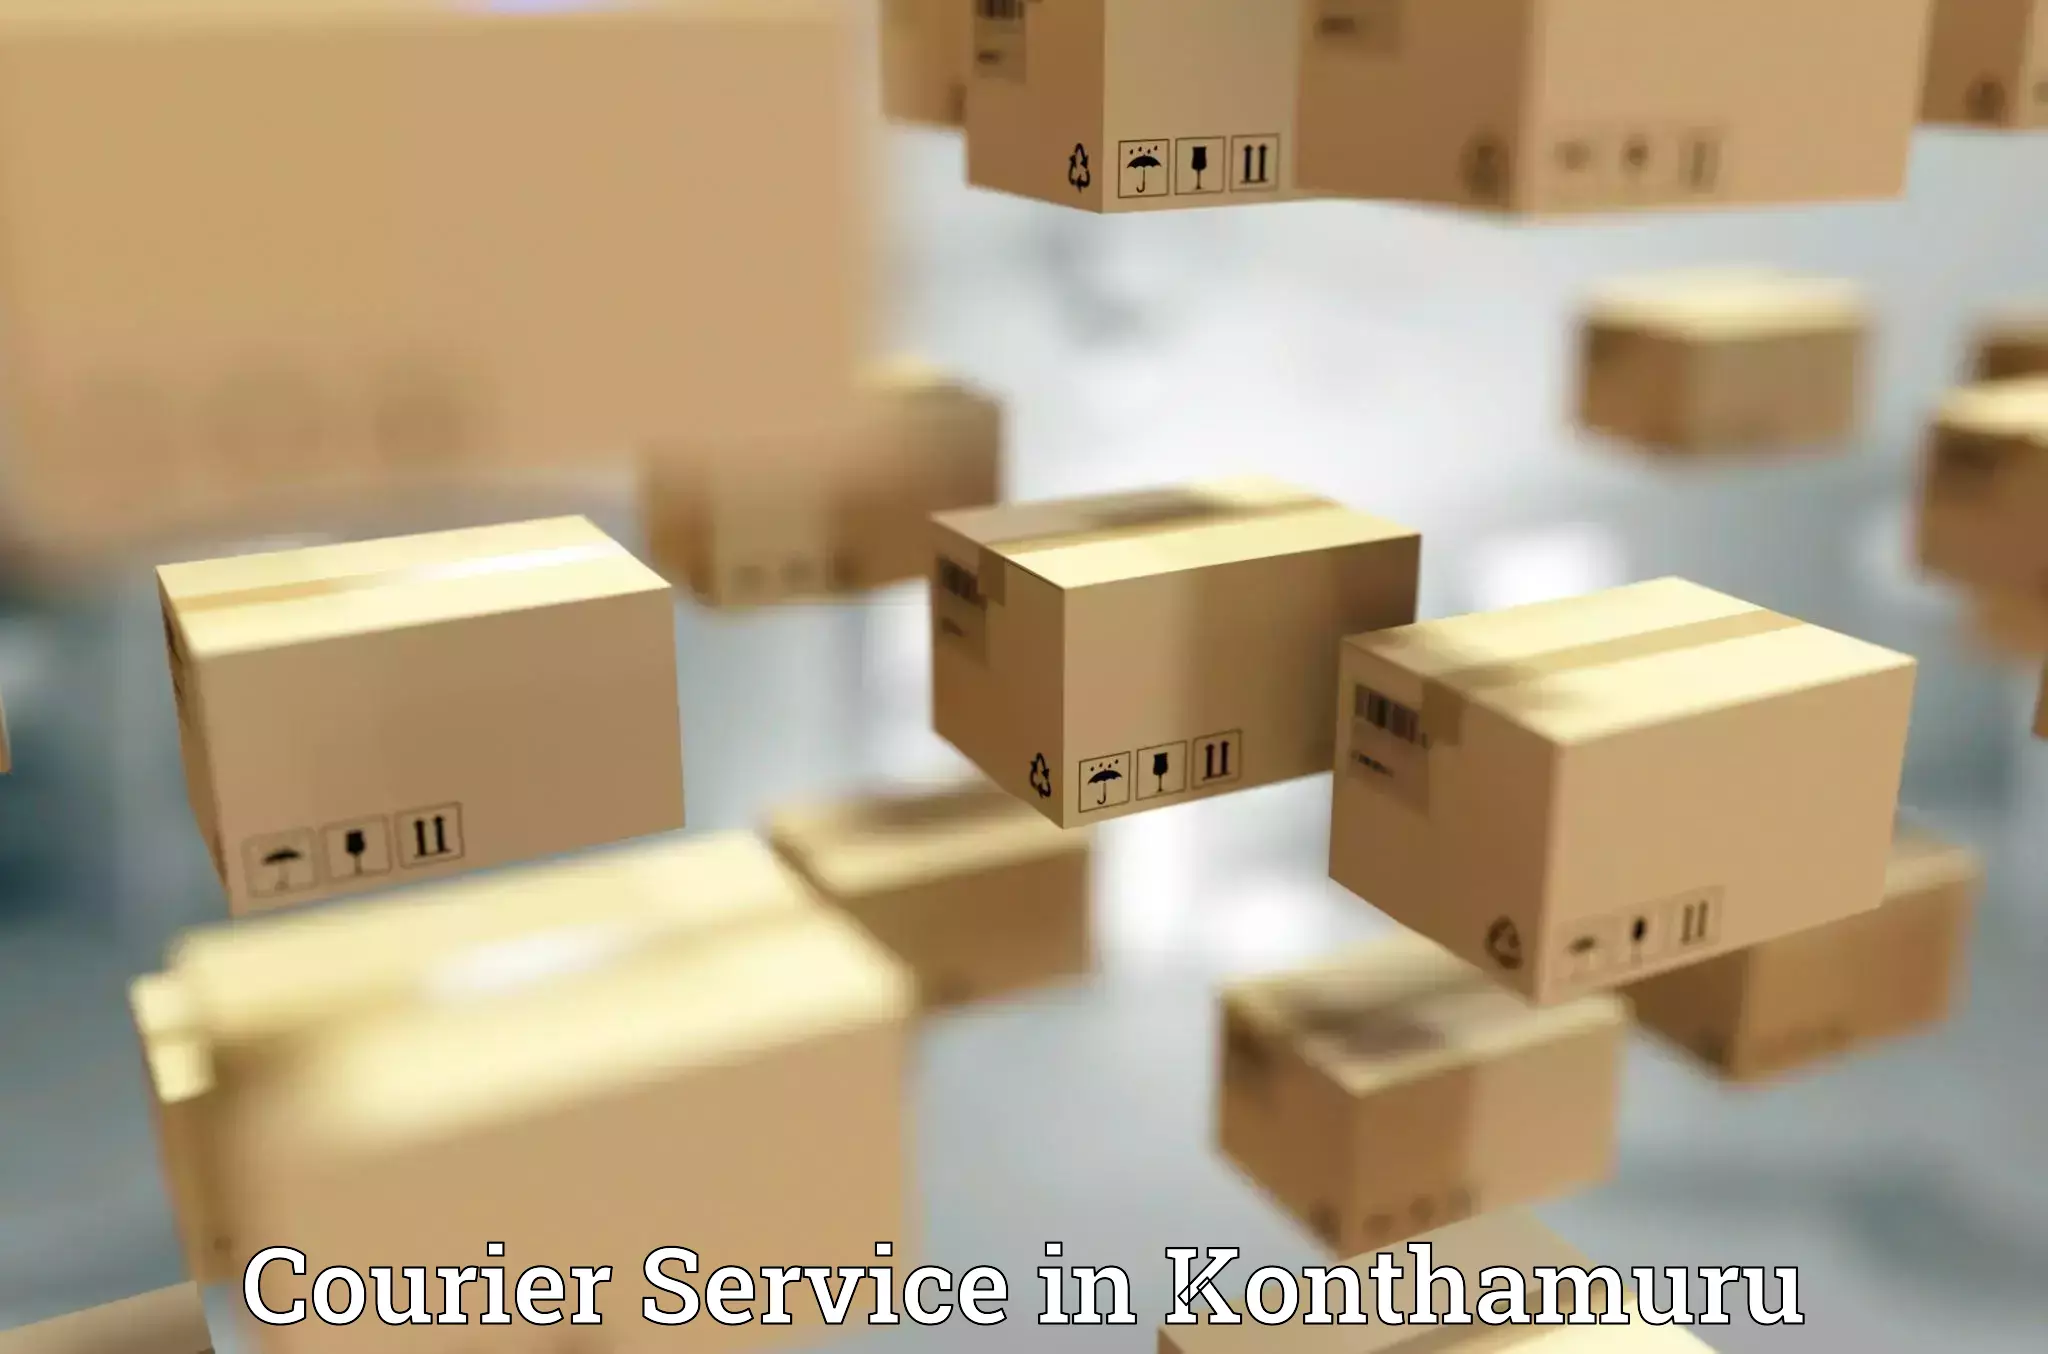 High-capacity parcel service in Konthamuru